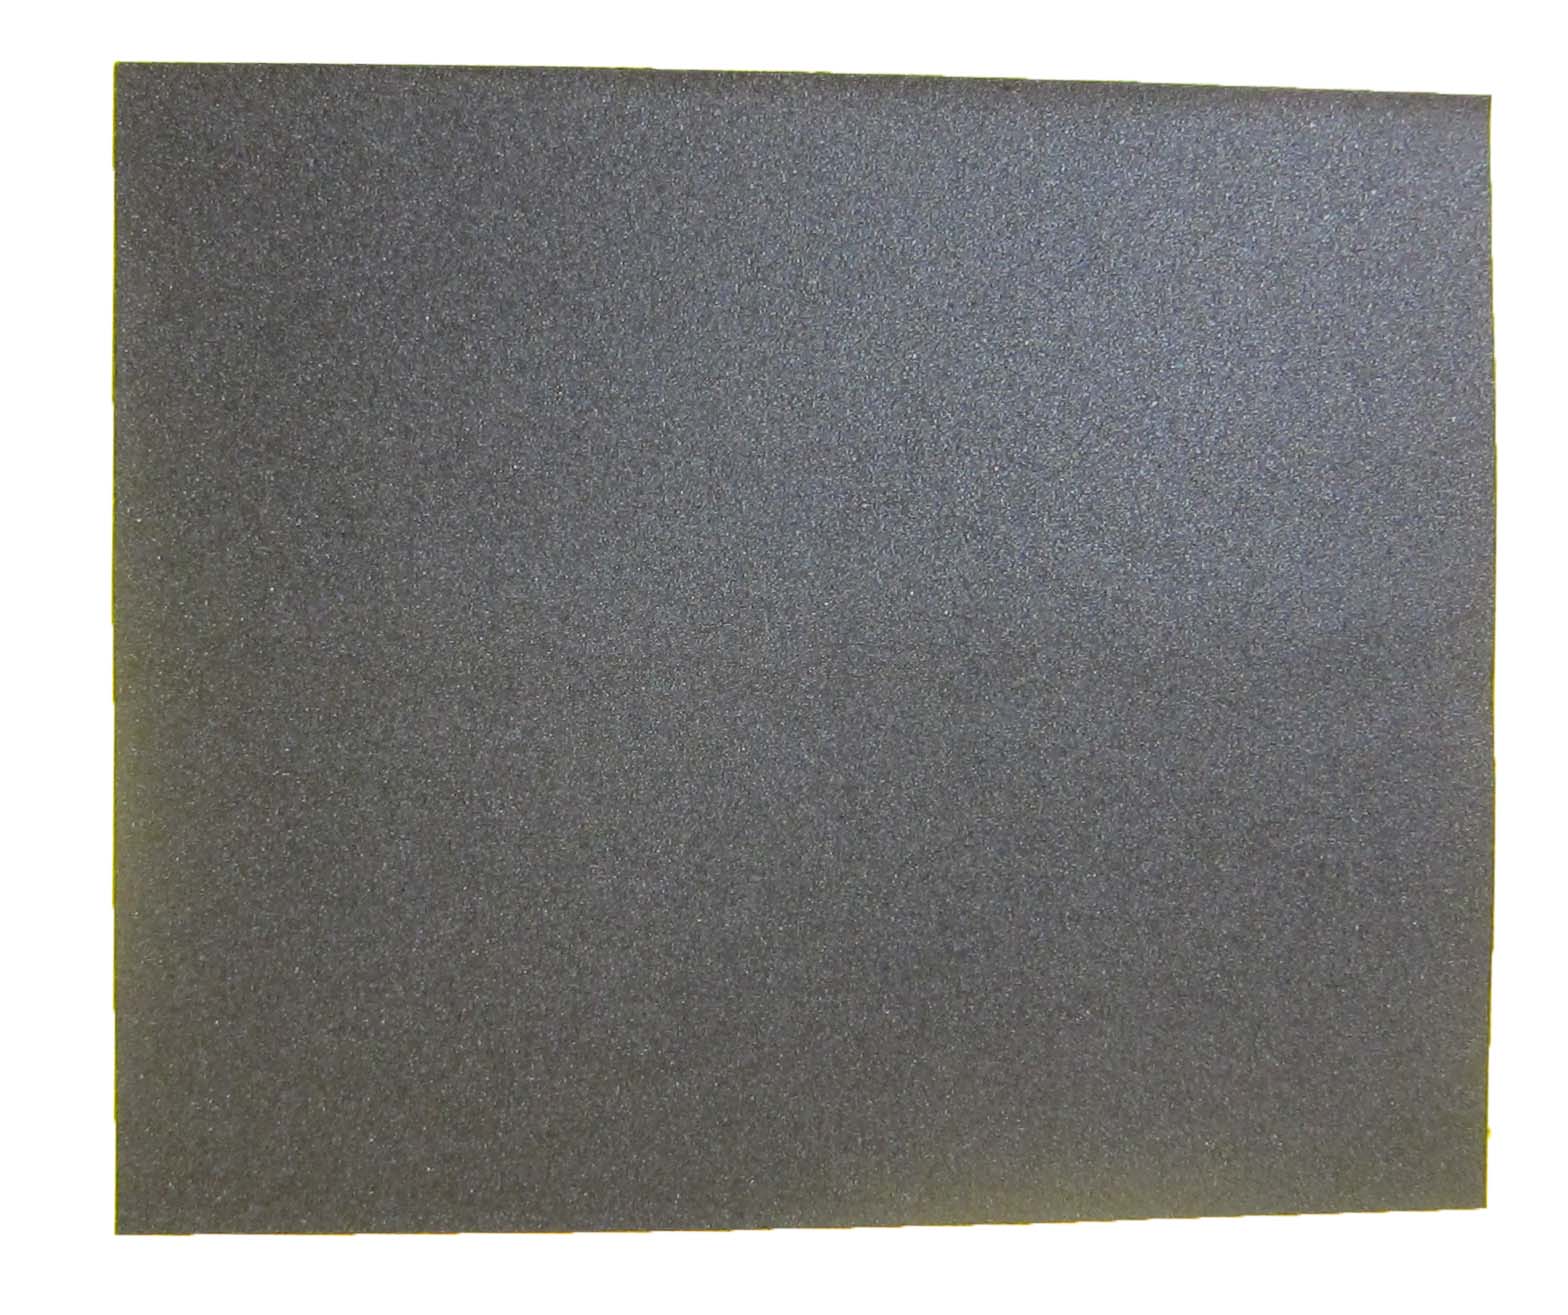  Aluminum Oxide Waterproof Paper -Aluminum Oxide Waterproof Abrasive Paper